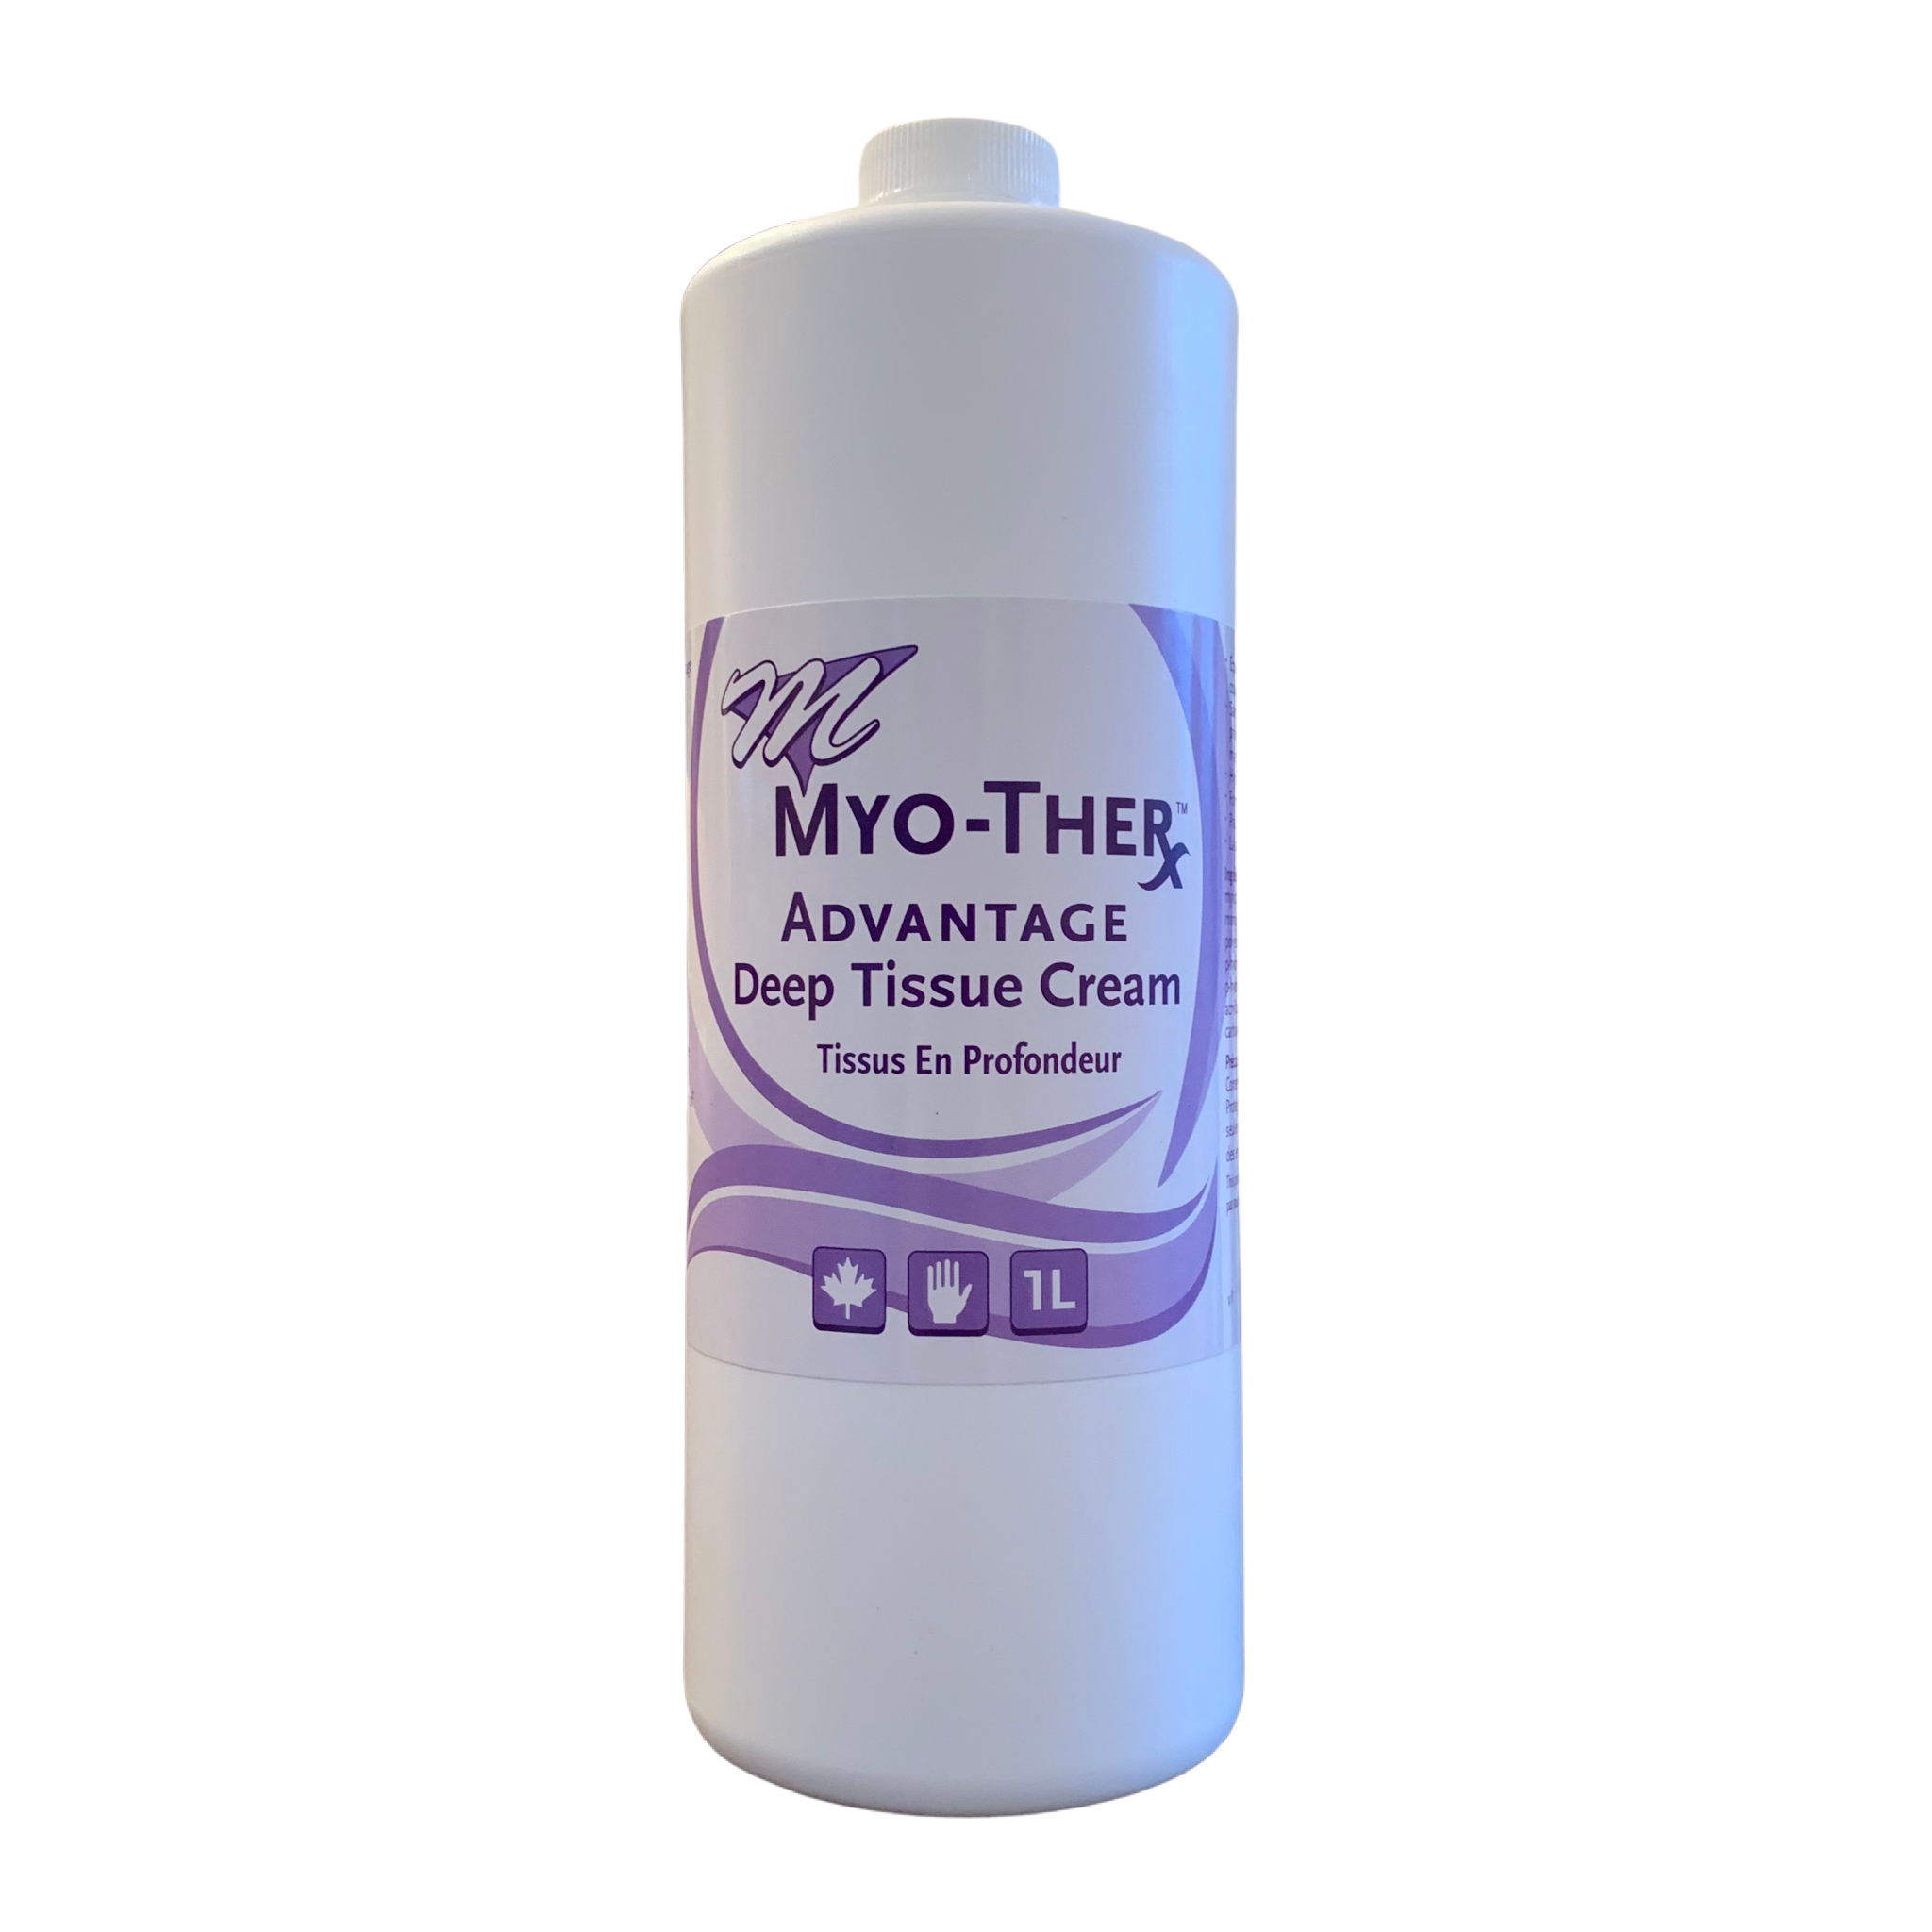 Myo-Ther Advantage Deep Tissue Cream 1 Litre